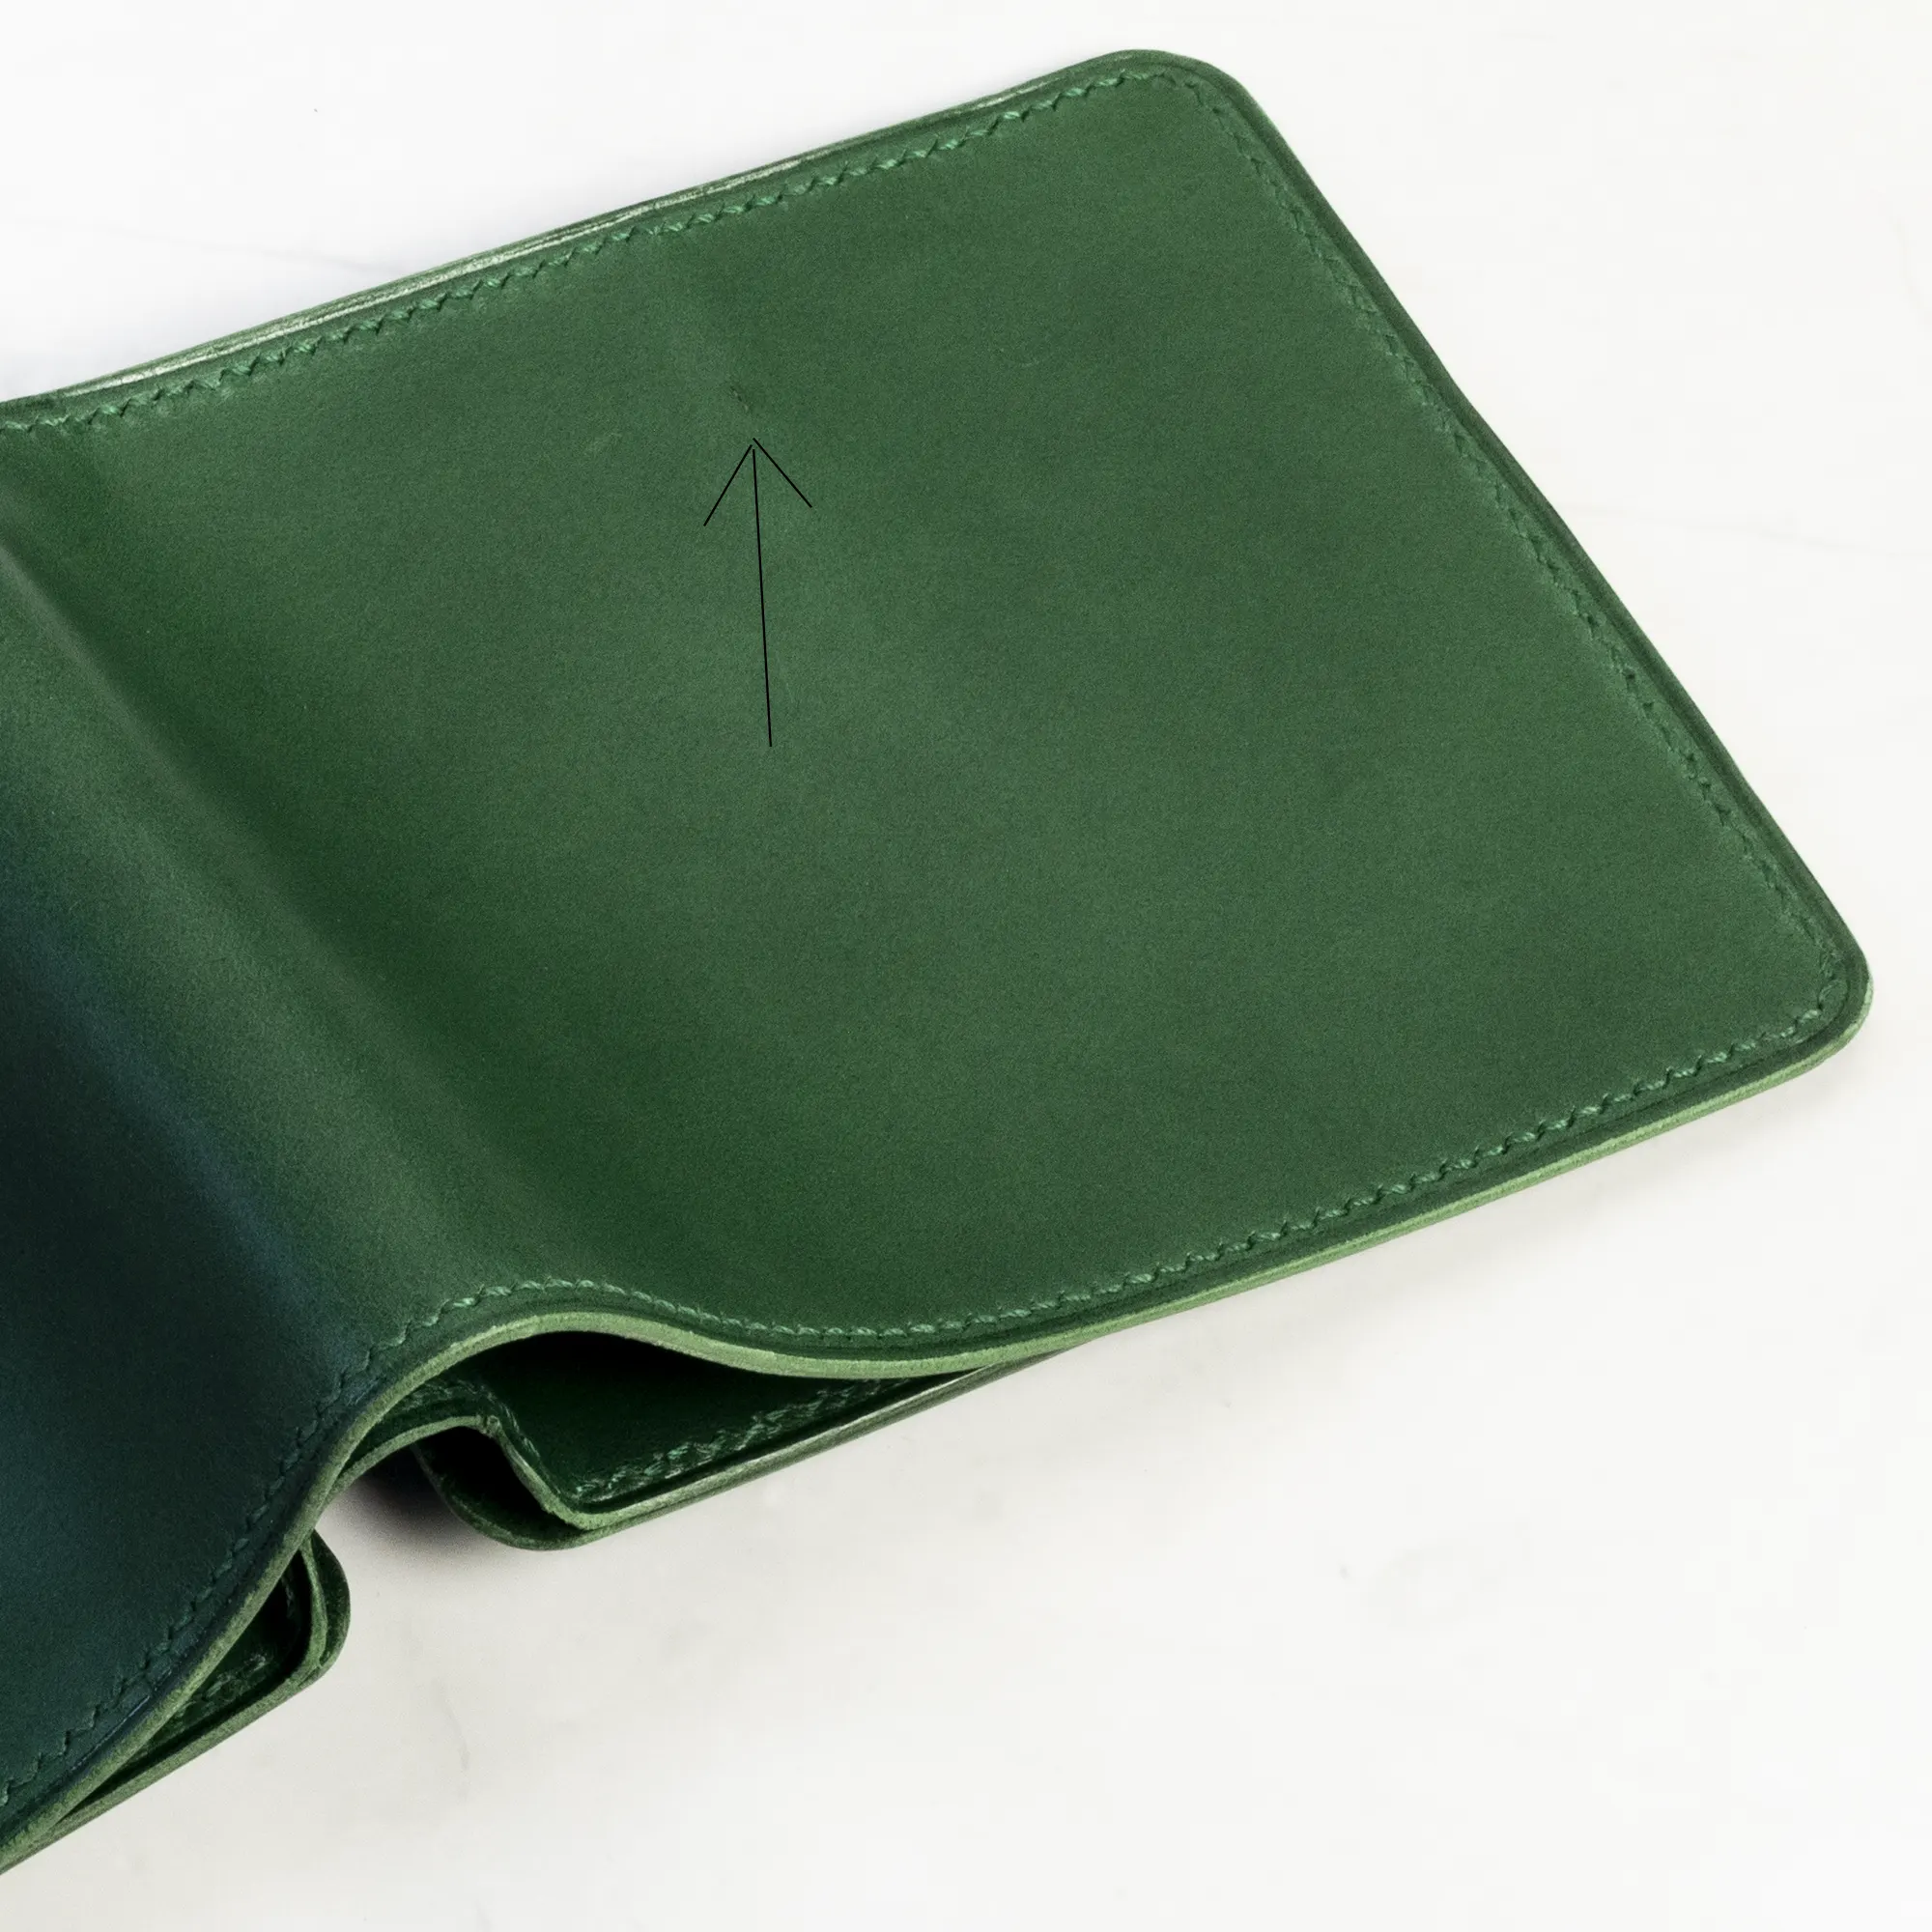 possala designs handmade green leather bifold sustainable